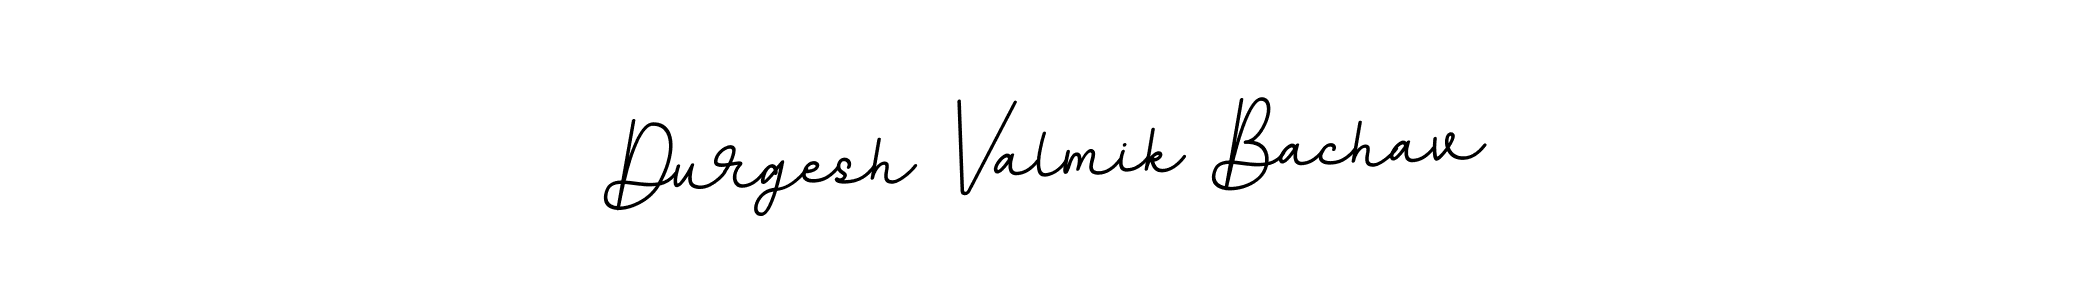 How to Draw Durgesh Valmik Bachav signature style? BallpointsItalic-DORy9 is a latest design signature styles for name Durgesh Valmik Bachav. Durgesh Valmik Bachav signature style 11 images and pictures png